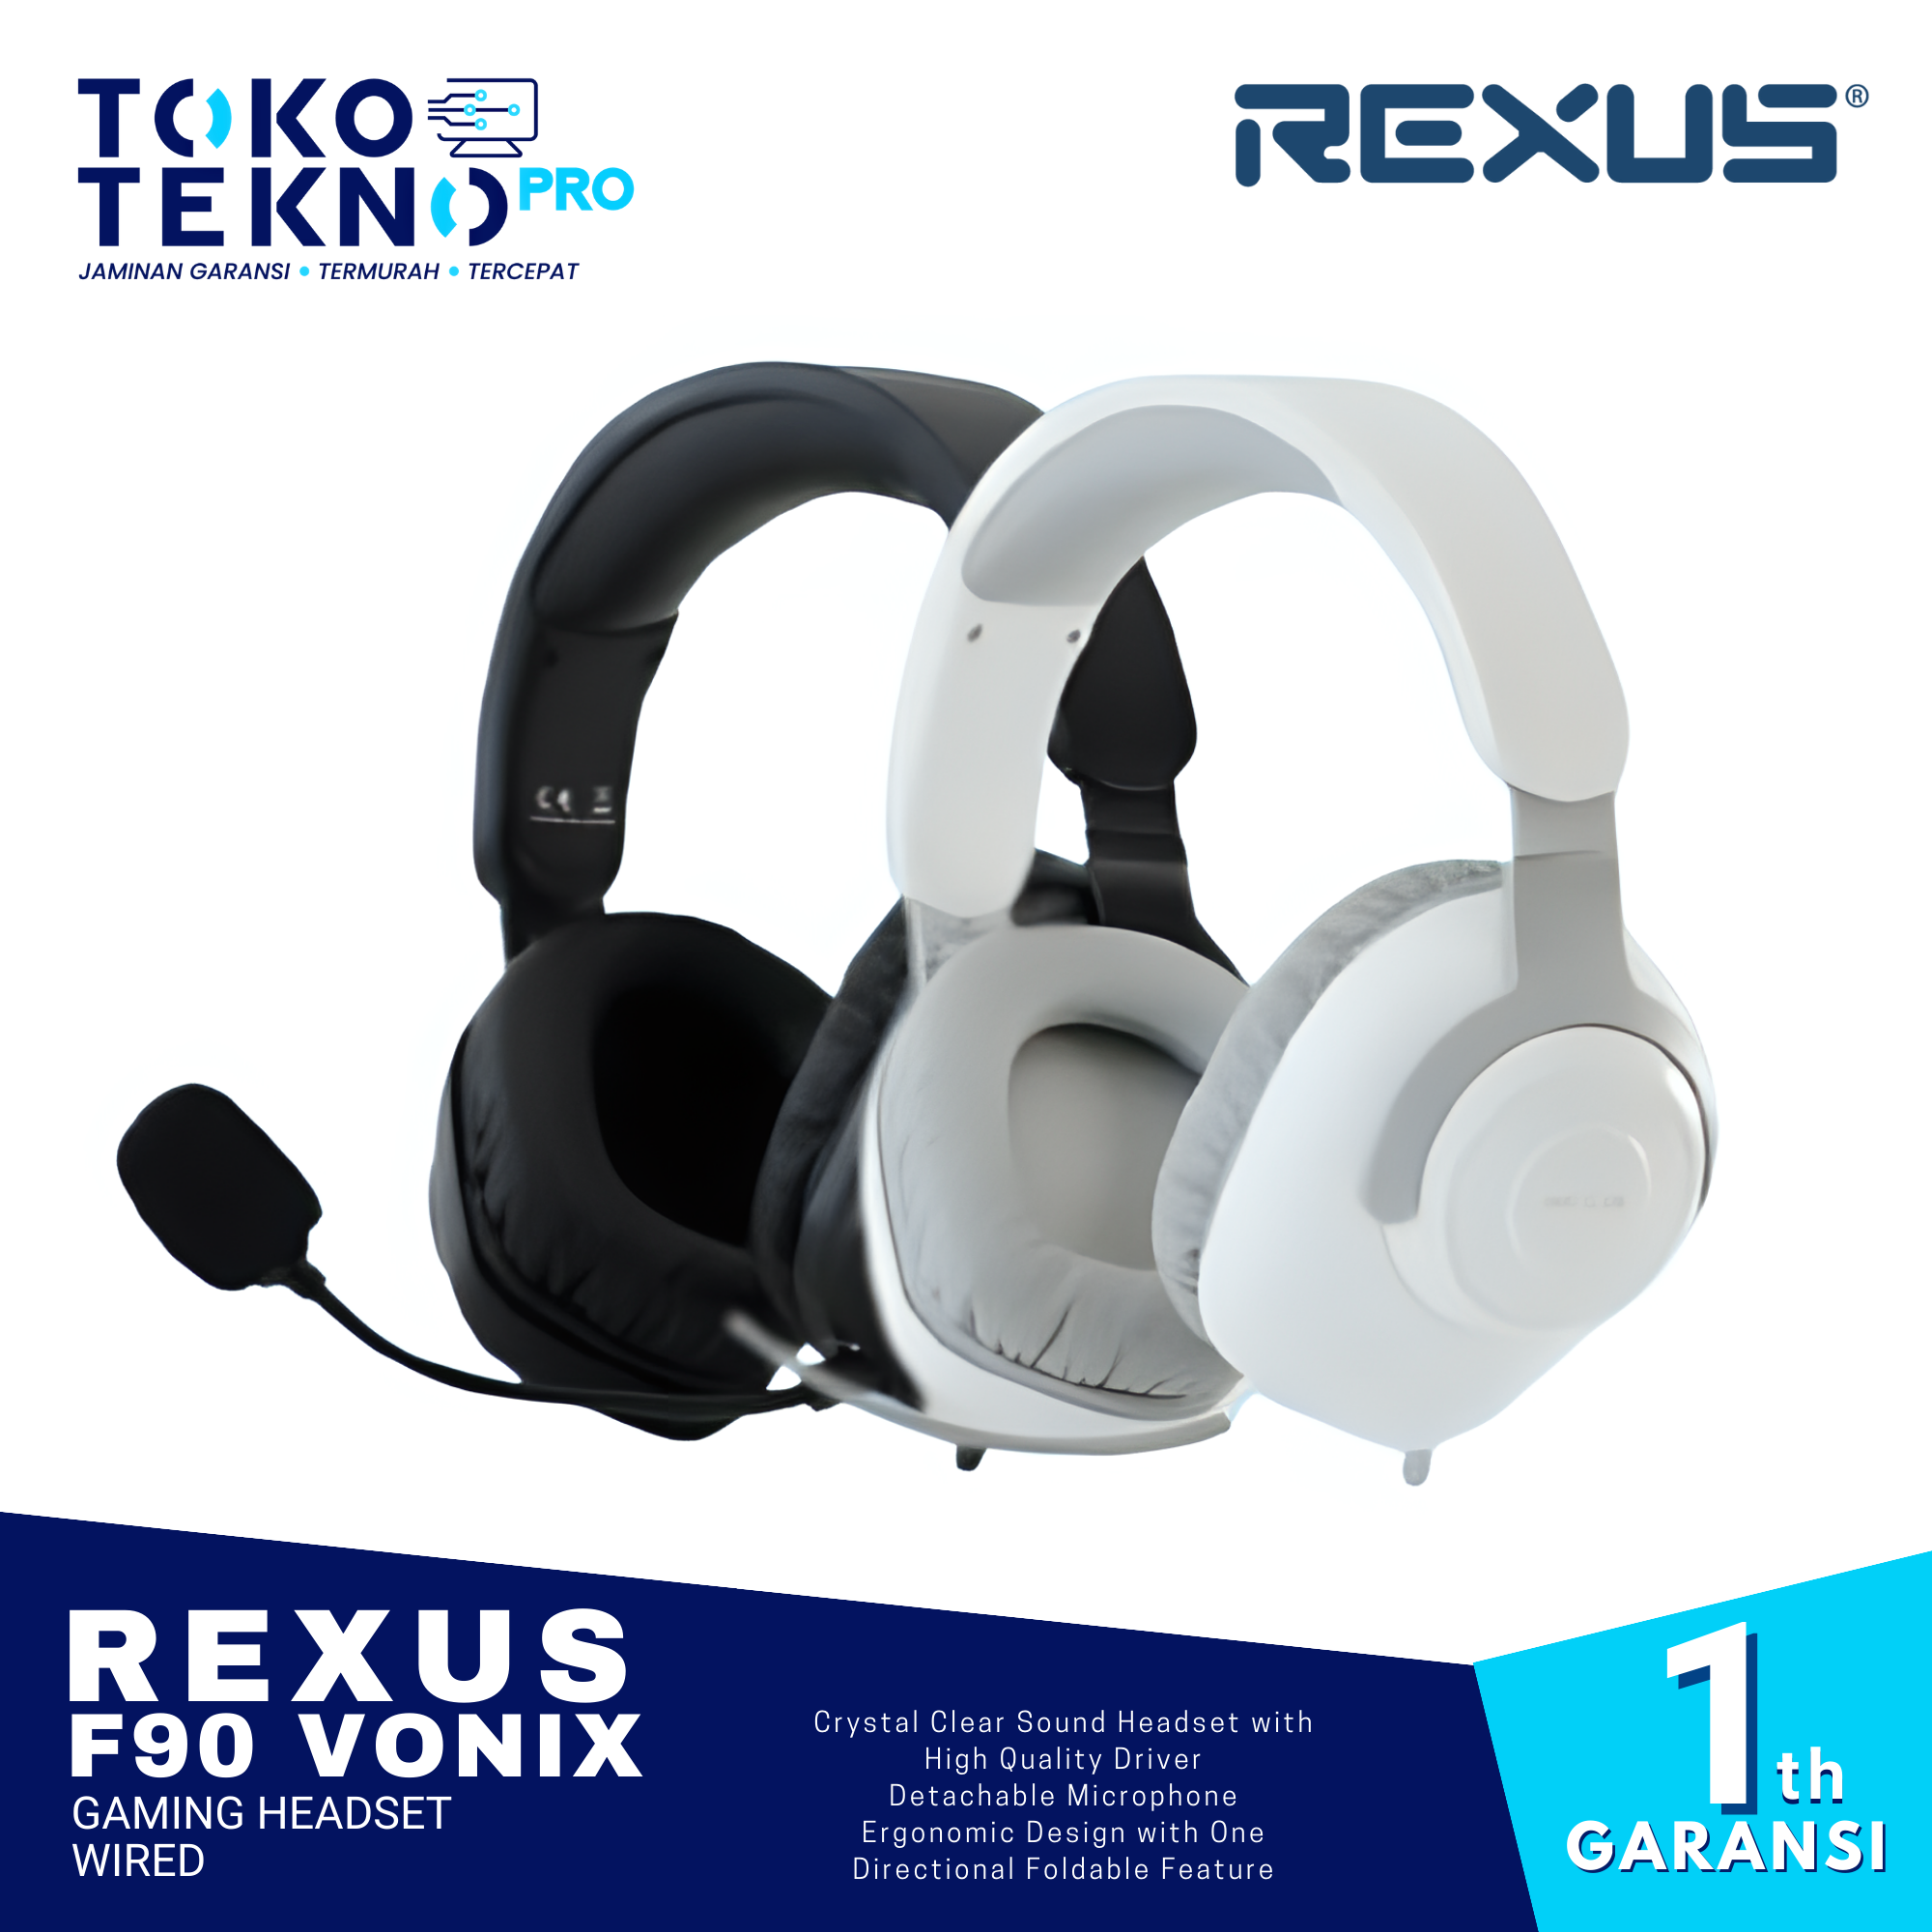 Rexus F90 Vonix Gaming Headset Wired